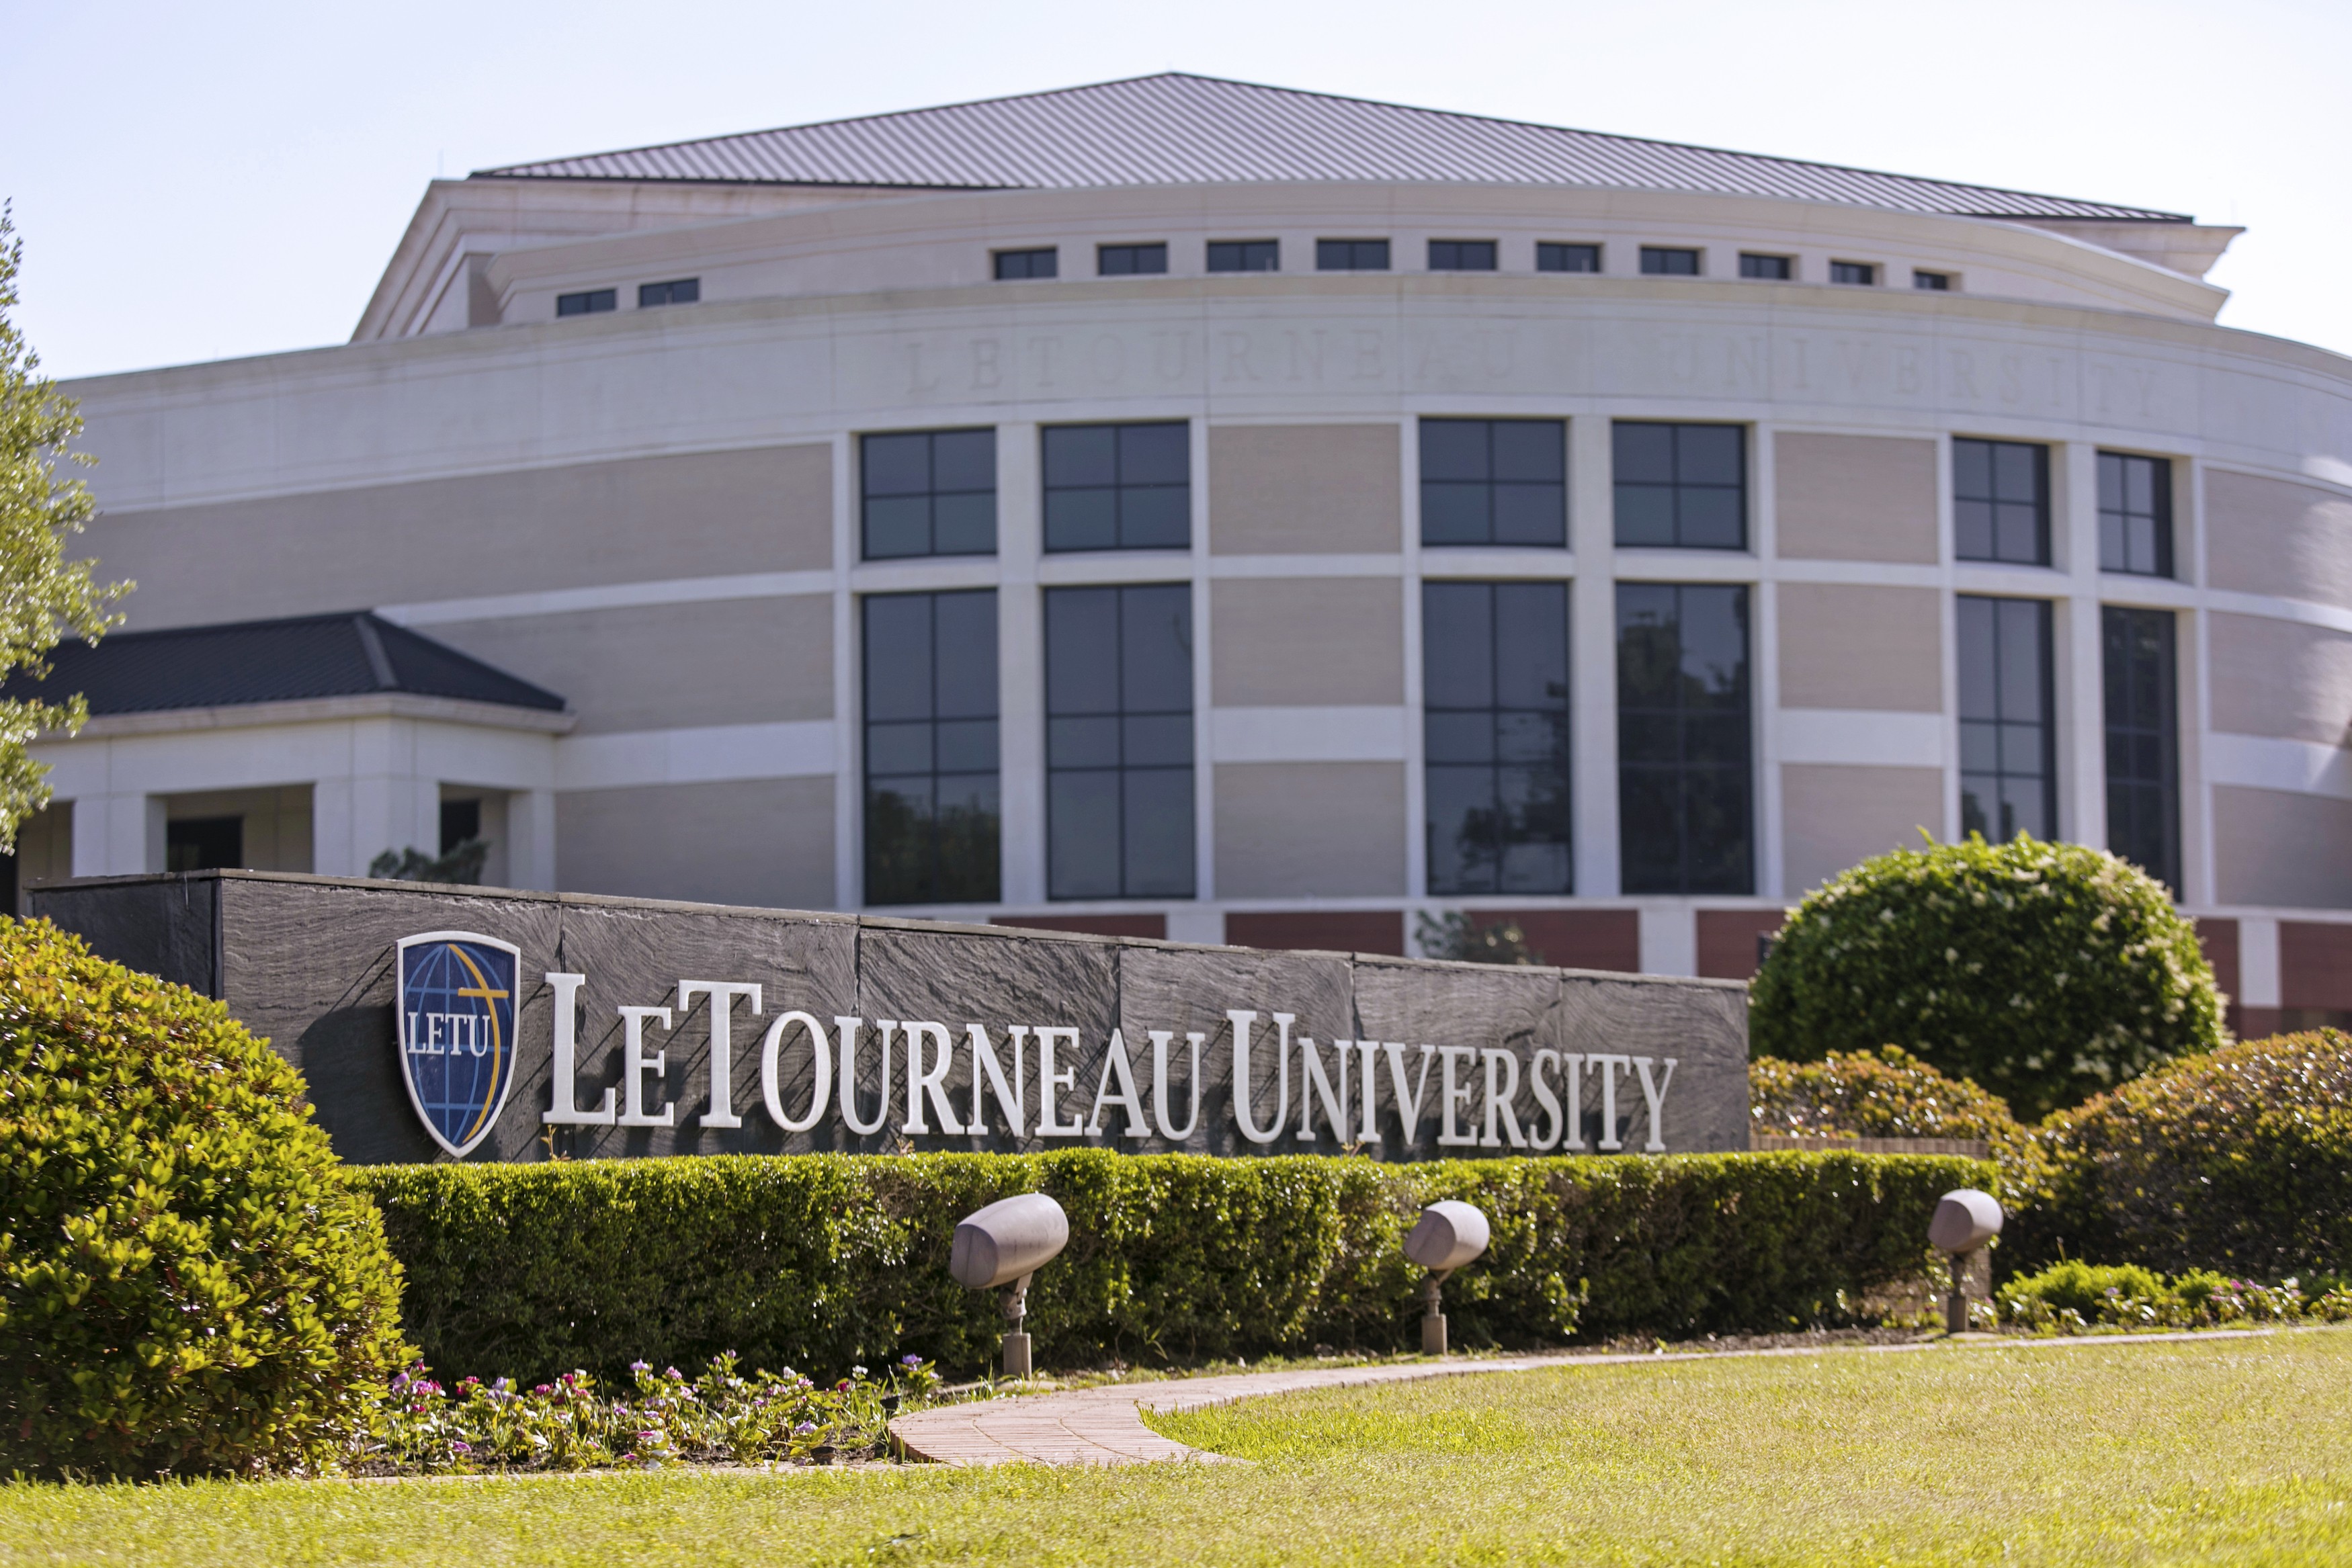 LeTourneau University | LinkedIn